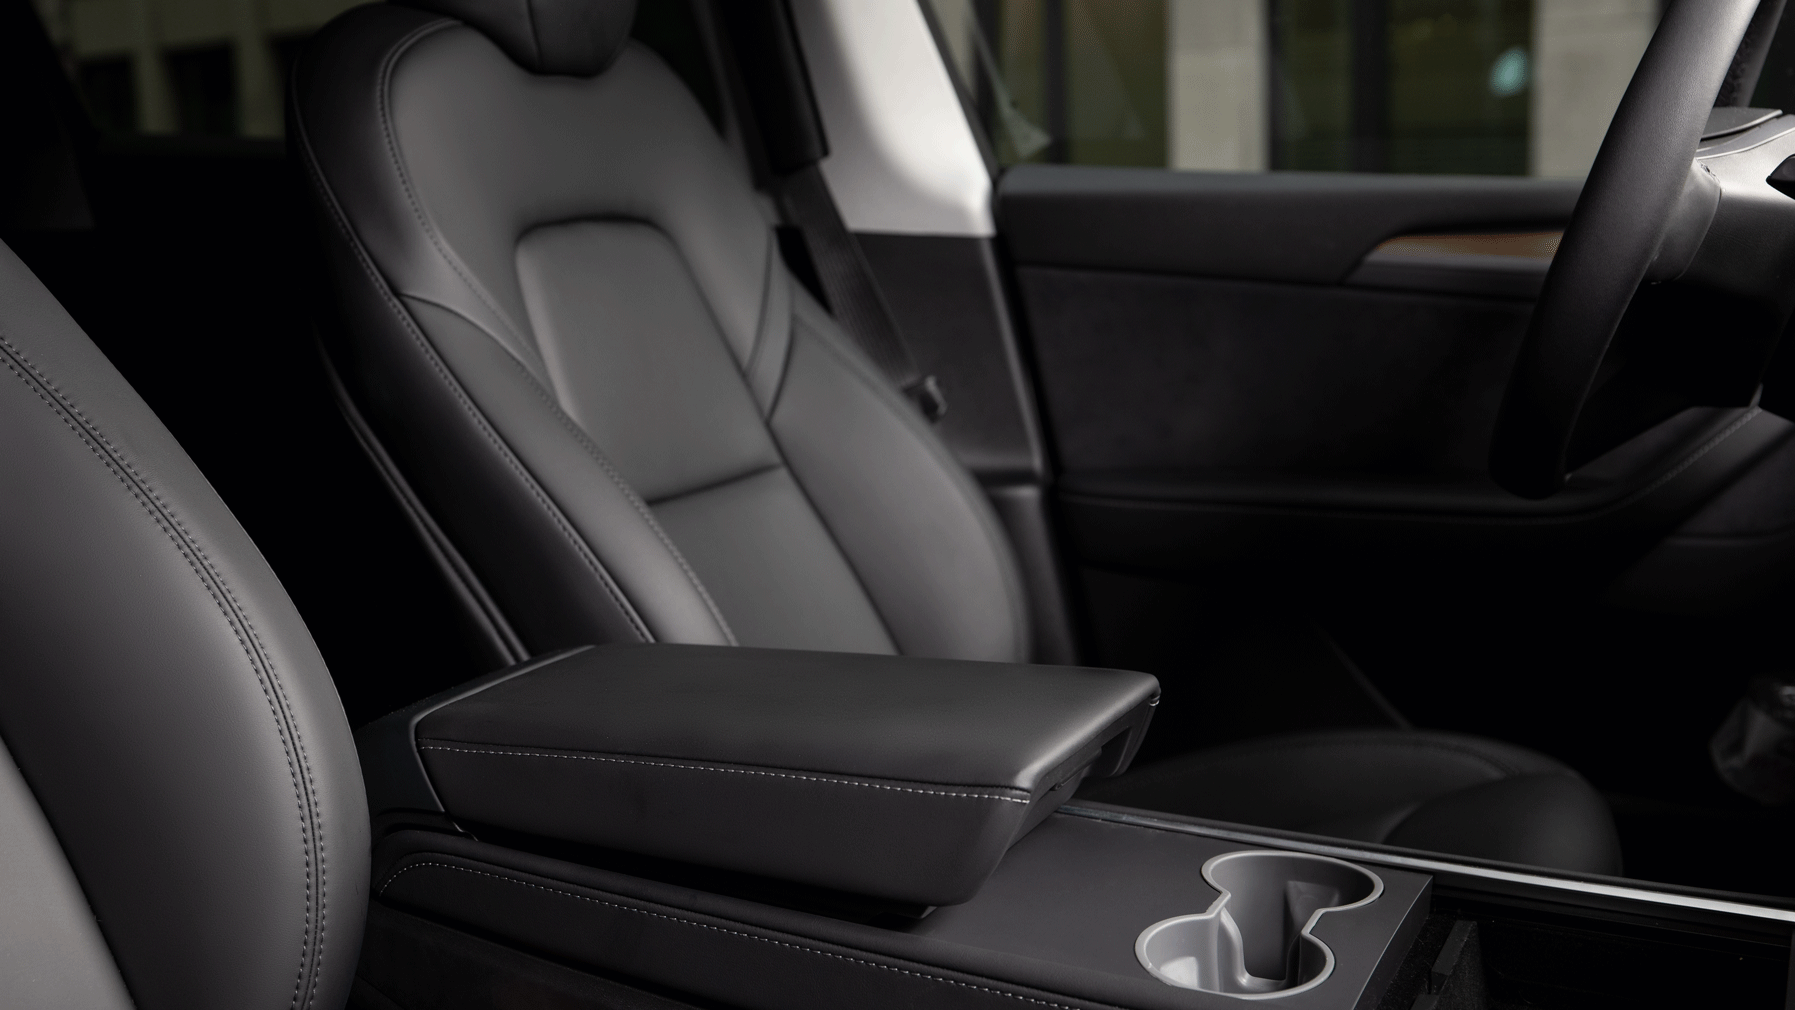 Secret compartment in the armrest for the Tesla Model 3/Y